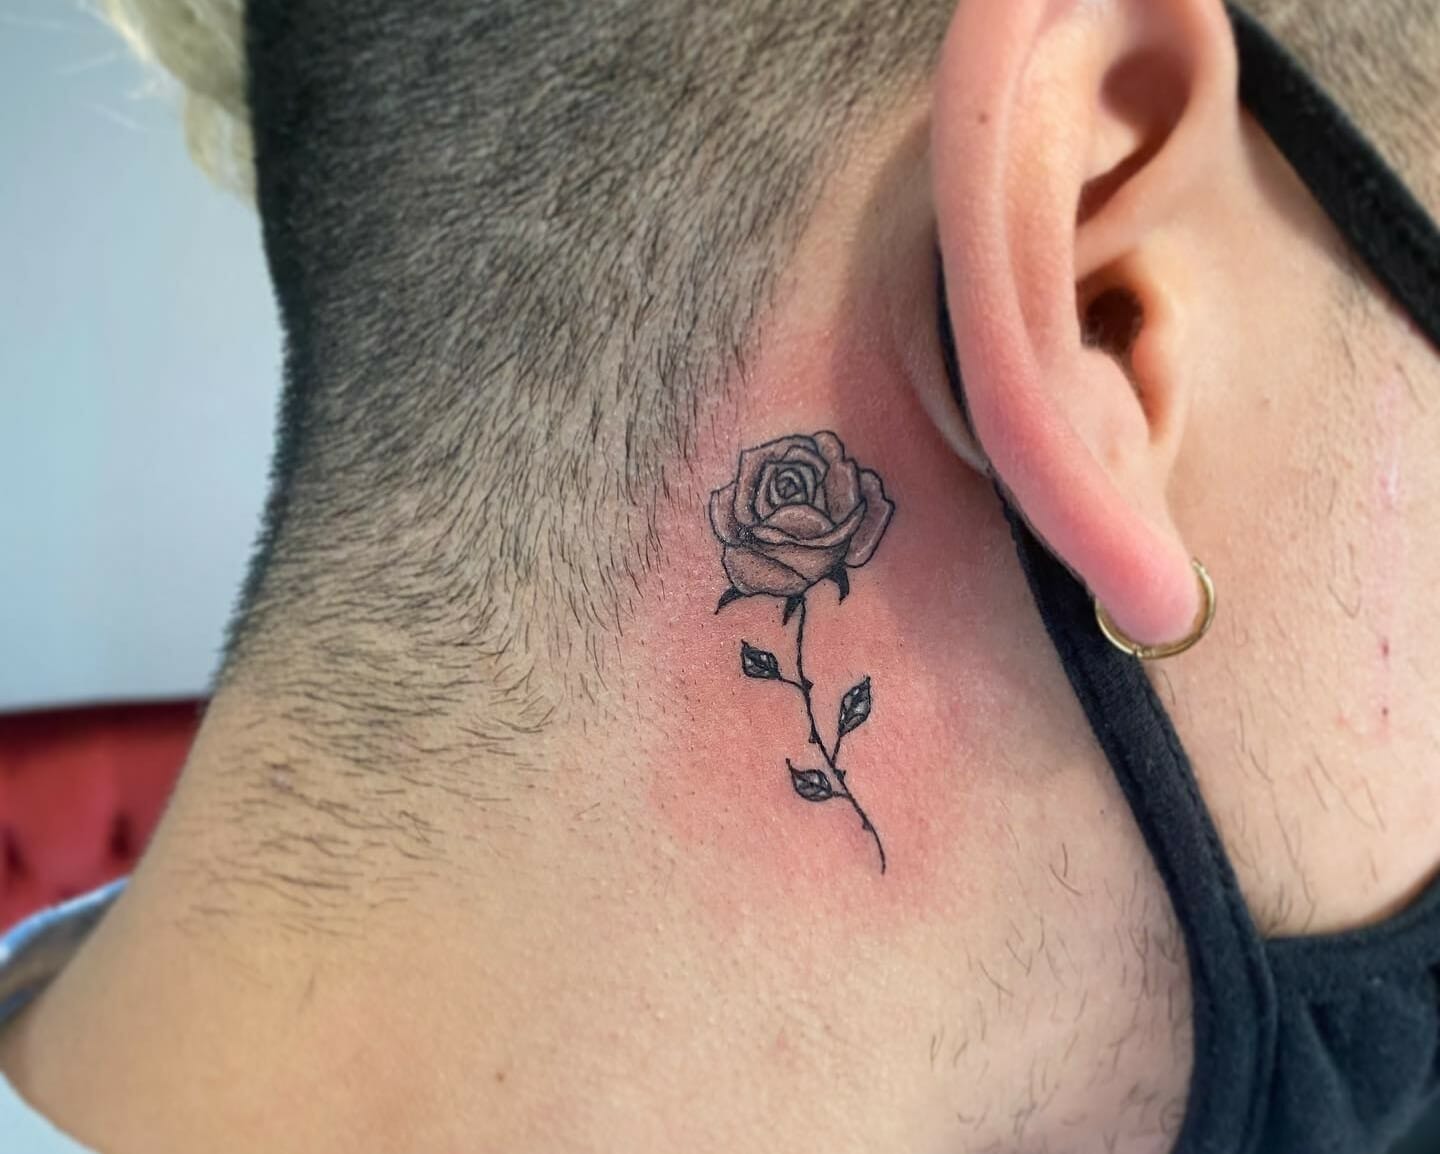 Tattoo behind ear men on Pinterest